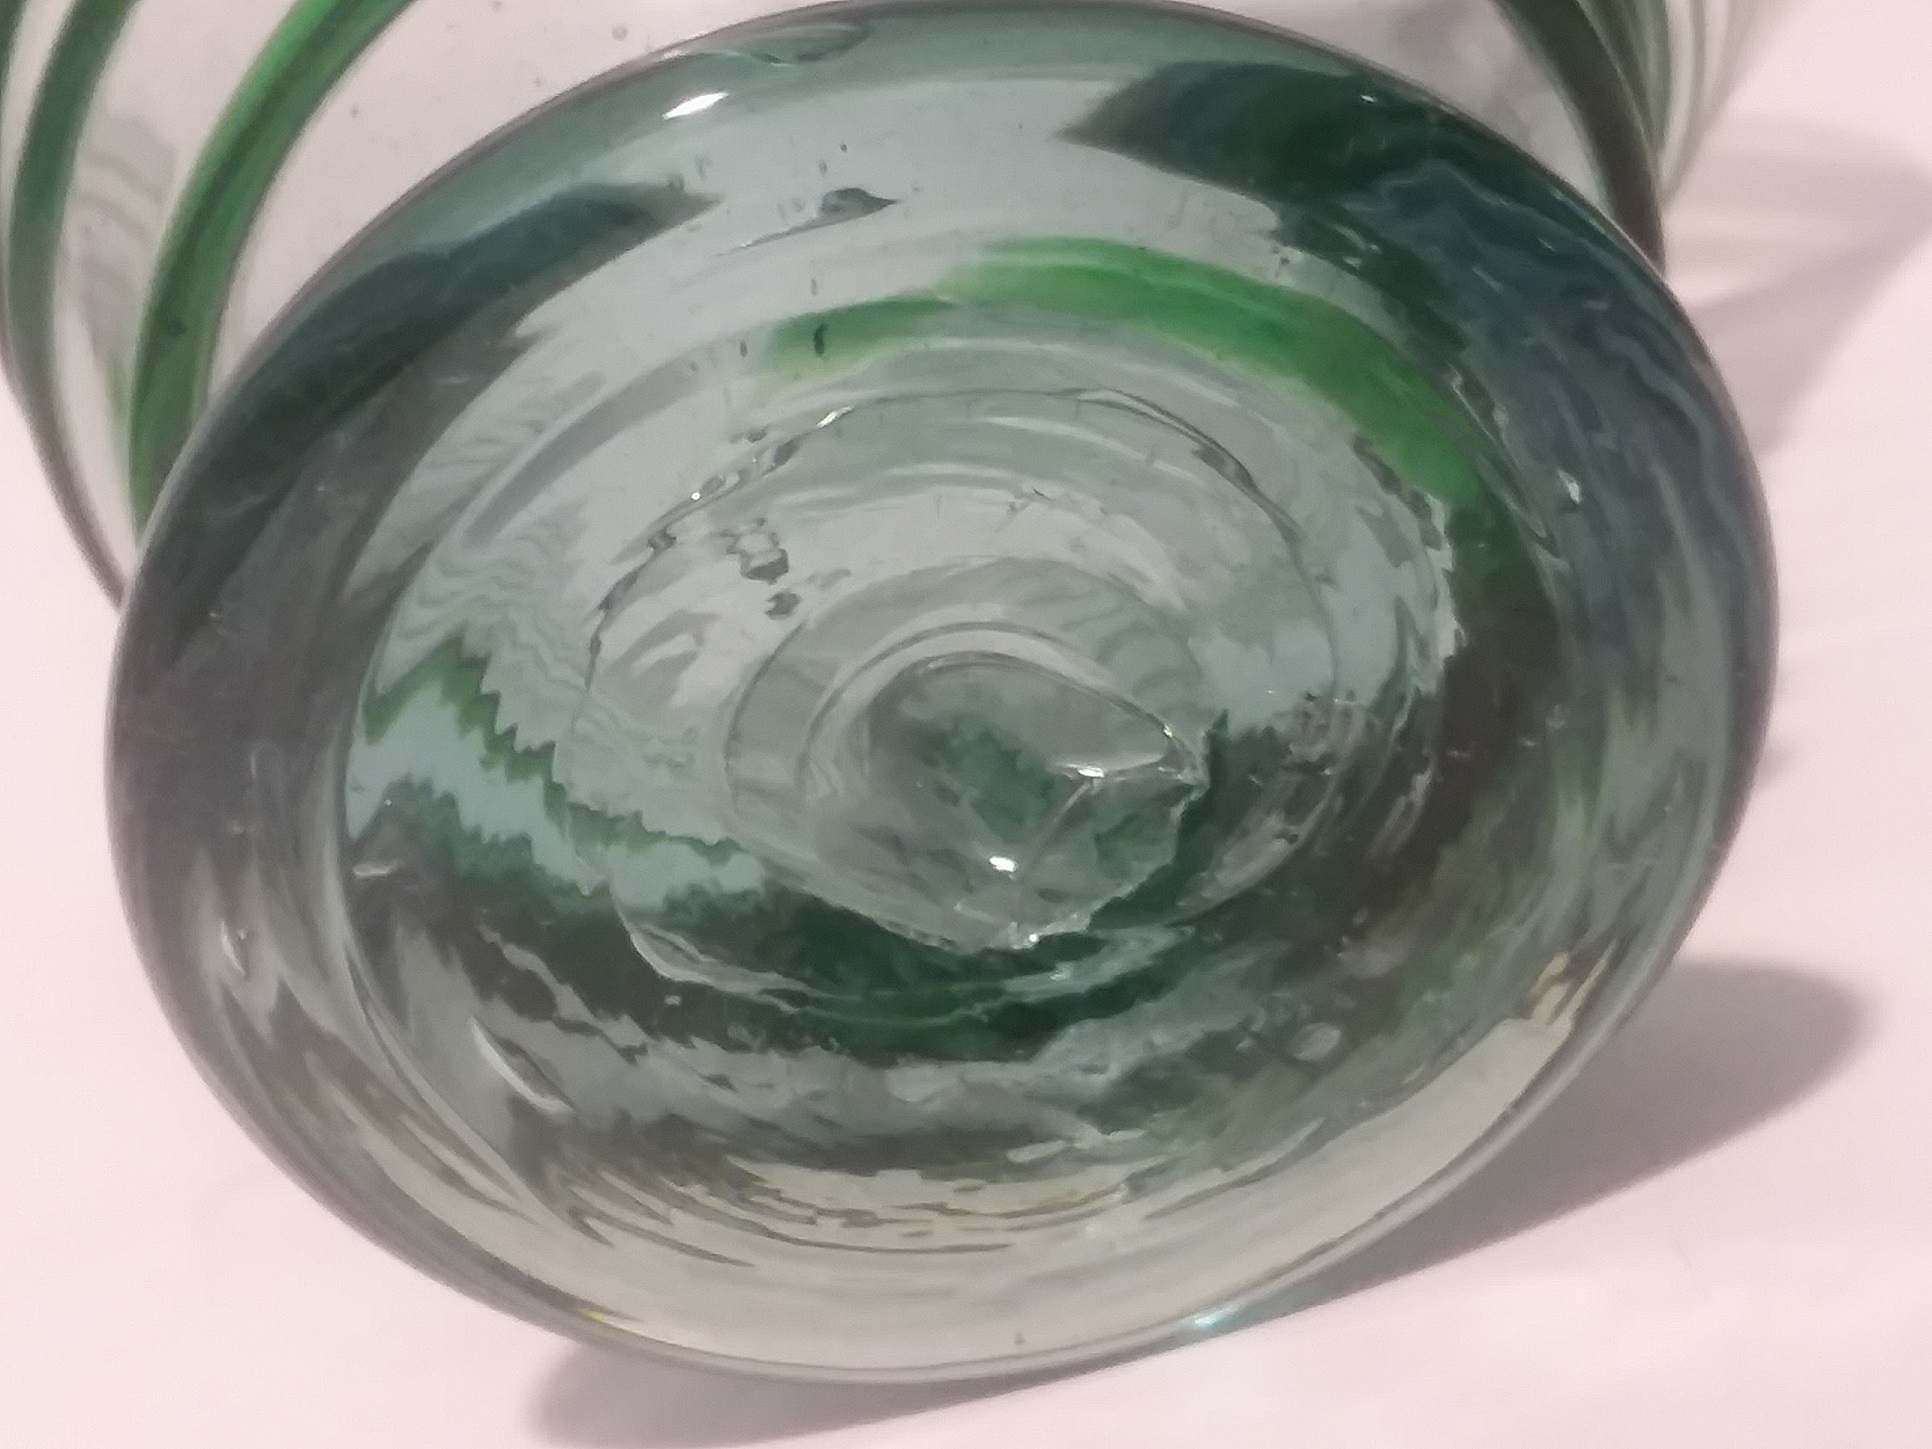 Please help identify wavy green glass bowl with green stripes